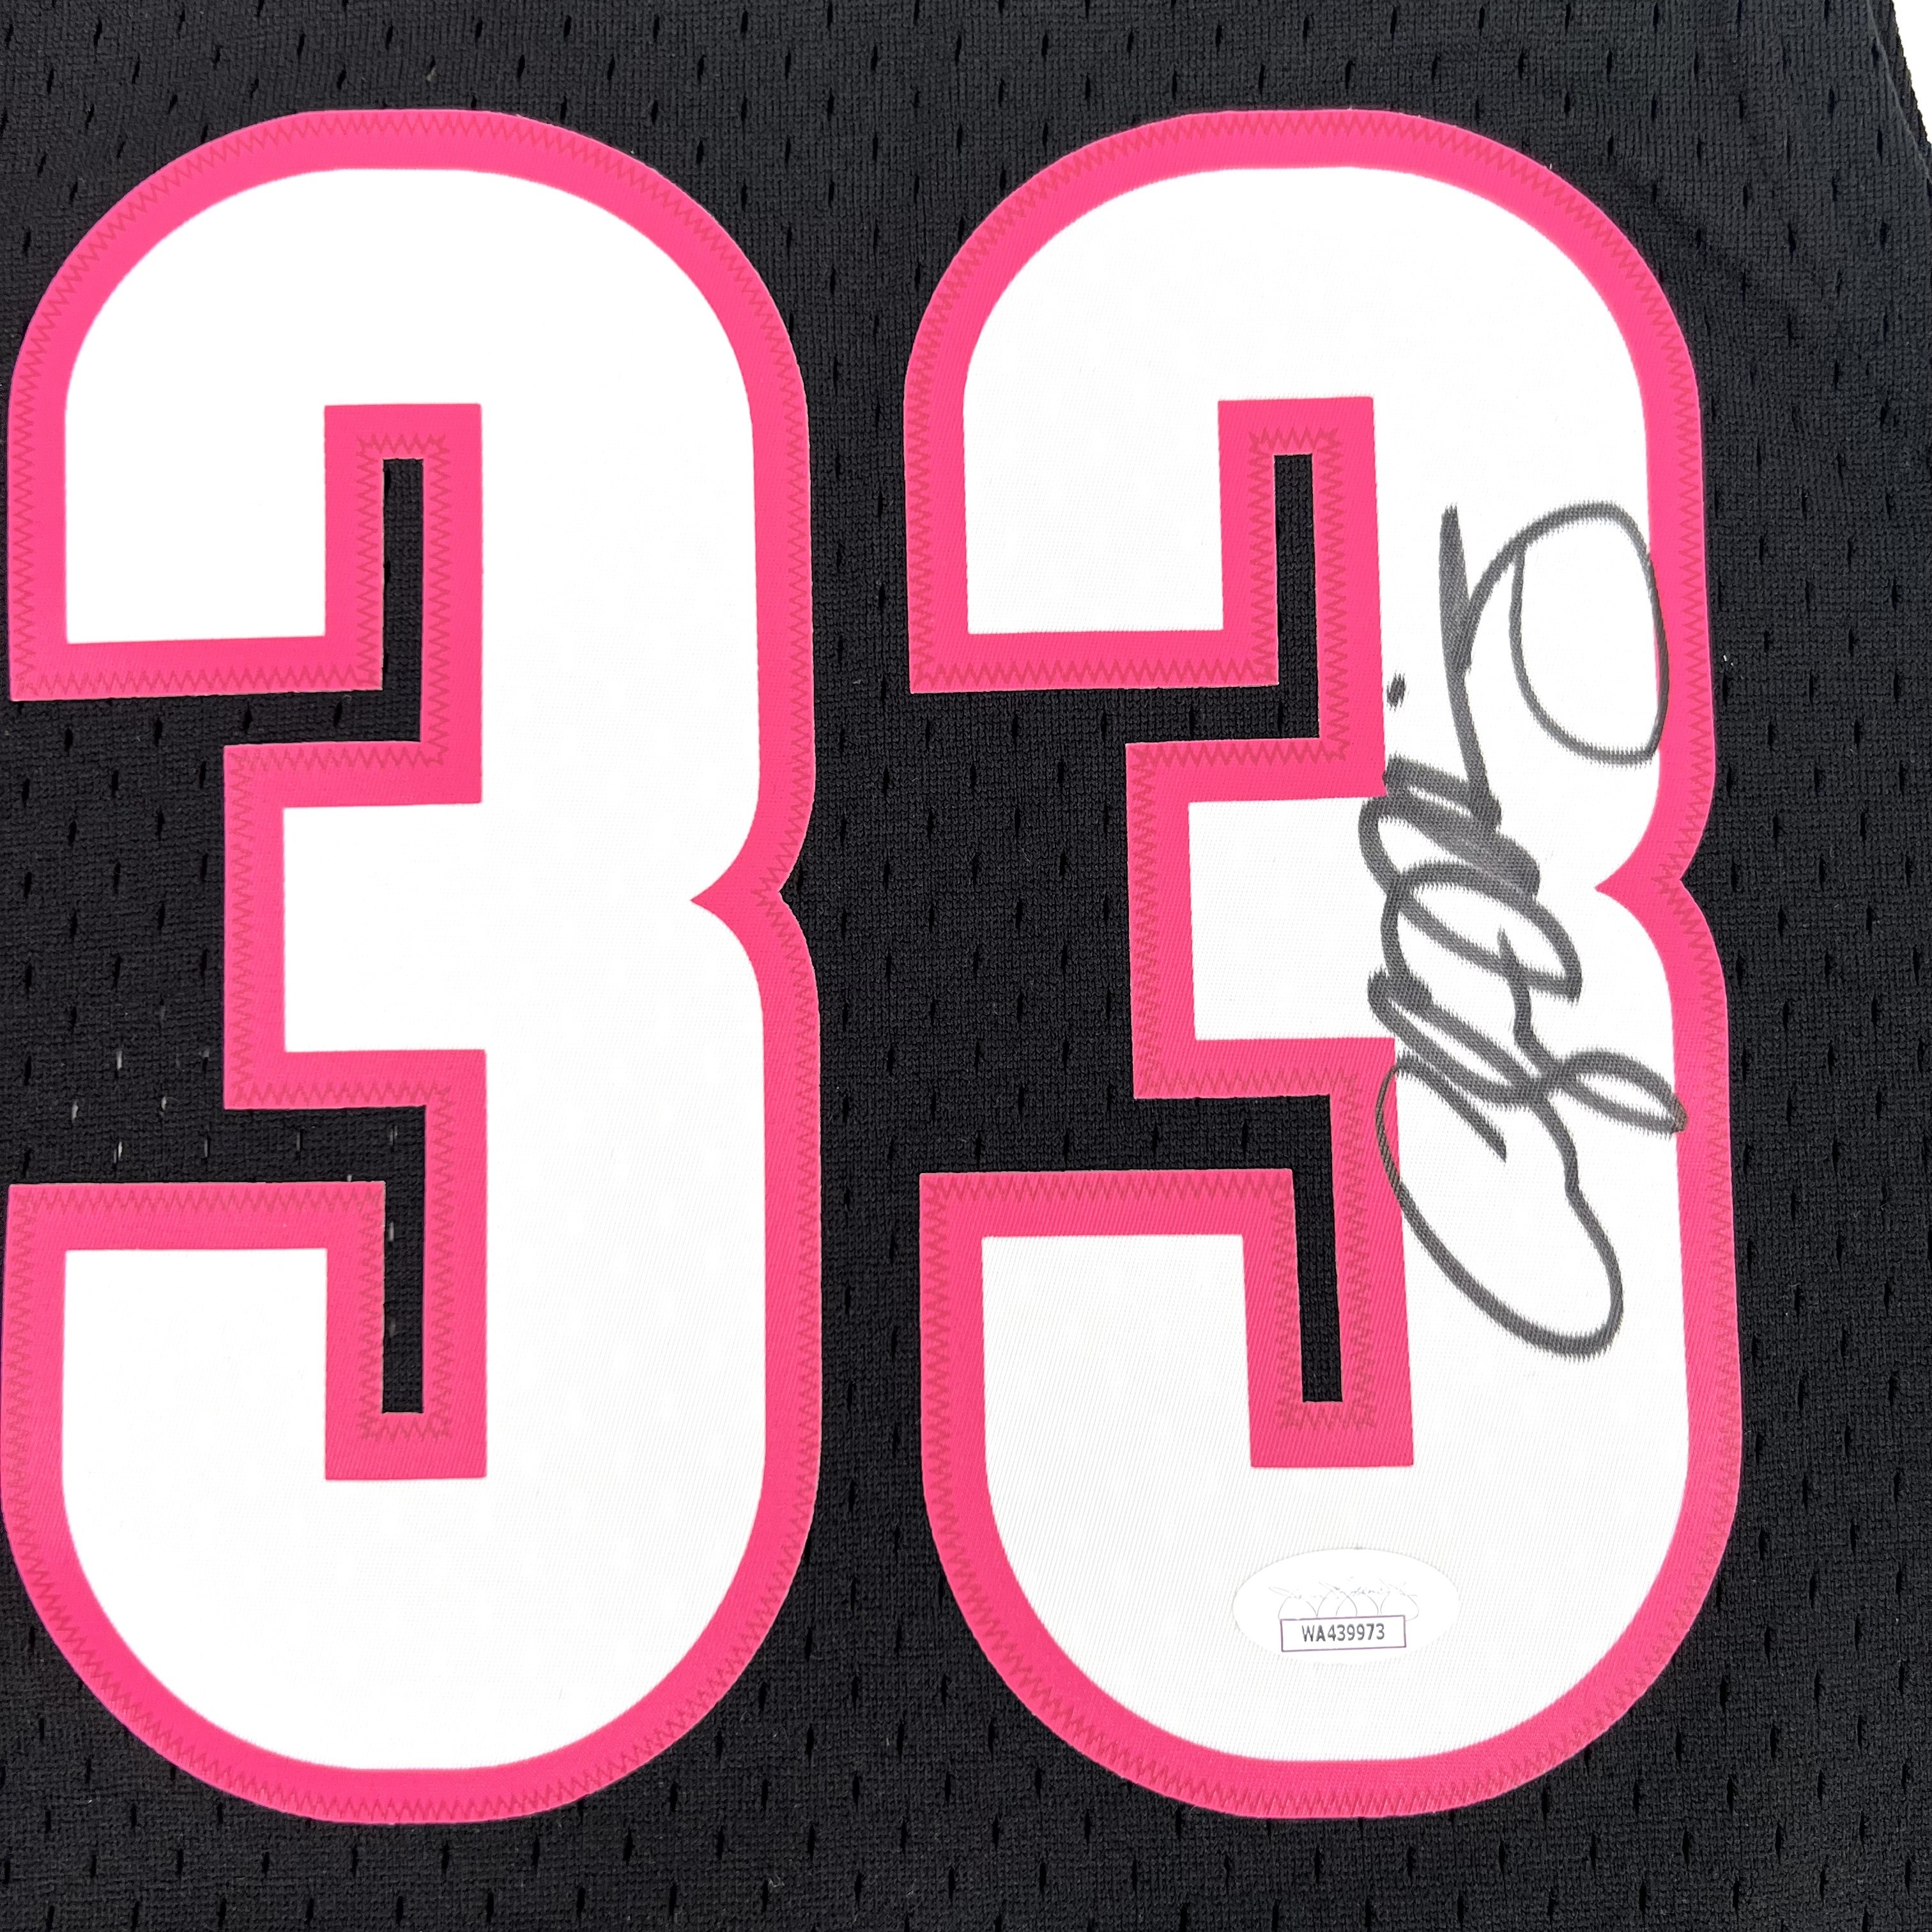 Miami Heat Alonzo Mourning Autographed Signed Jersey Jsa Coa – MVP